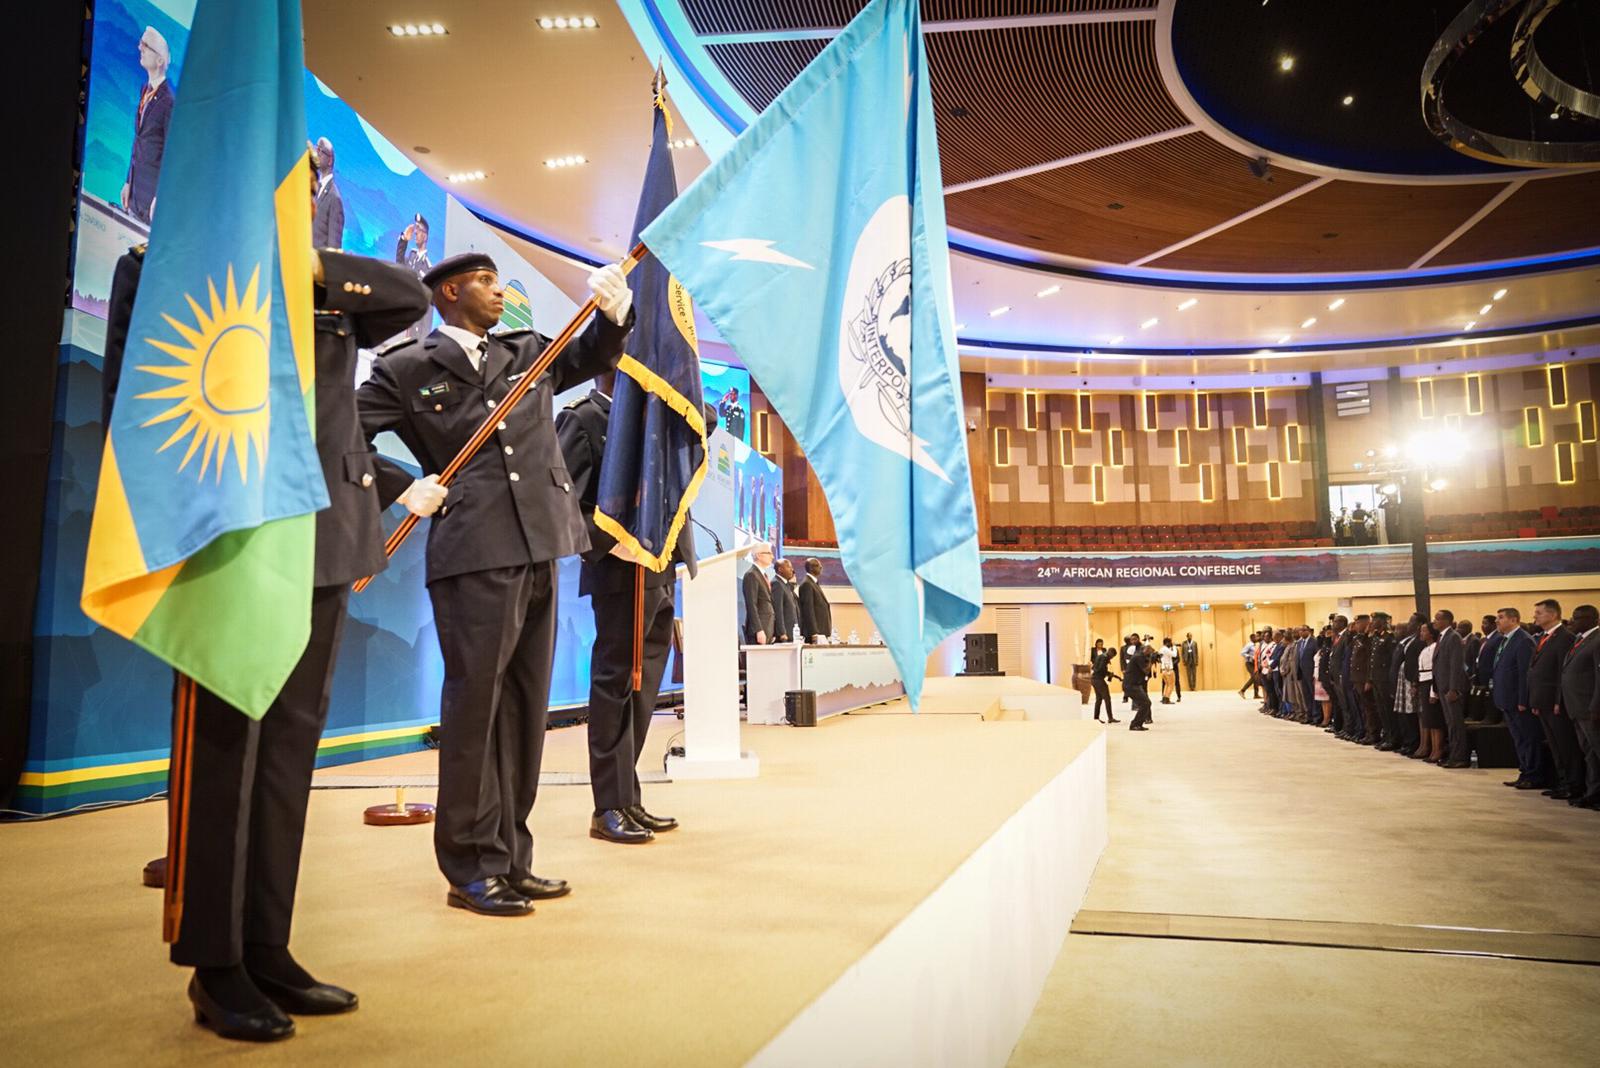 La 24ª Conferencia Regional Africana de INTERPOL se celebra en Kigali (Ruanda) del 5 al 7 de febrero.